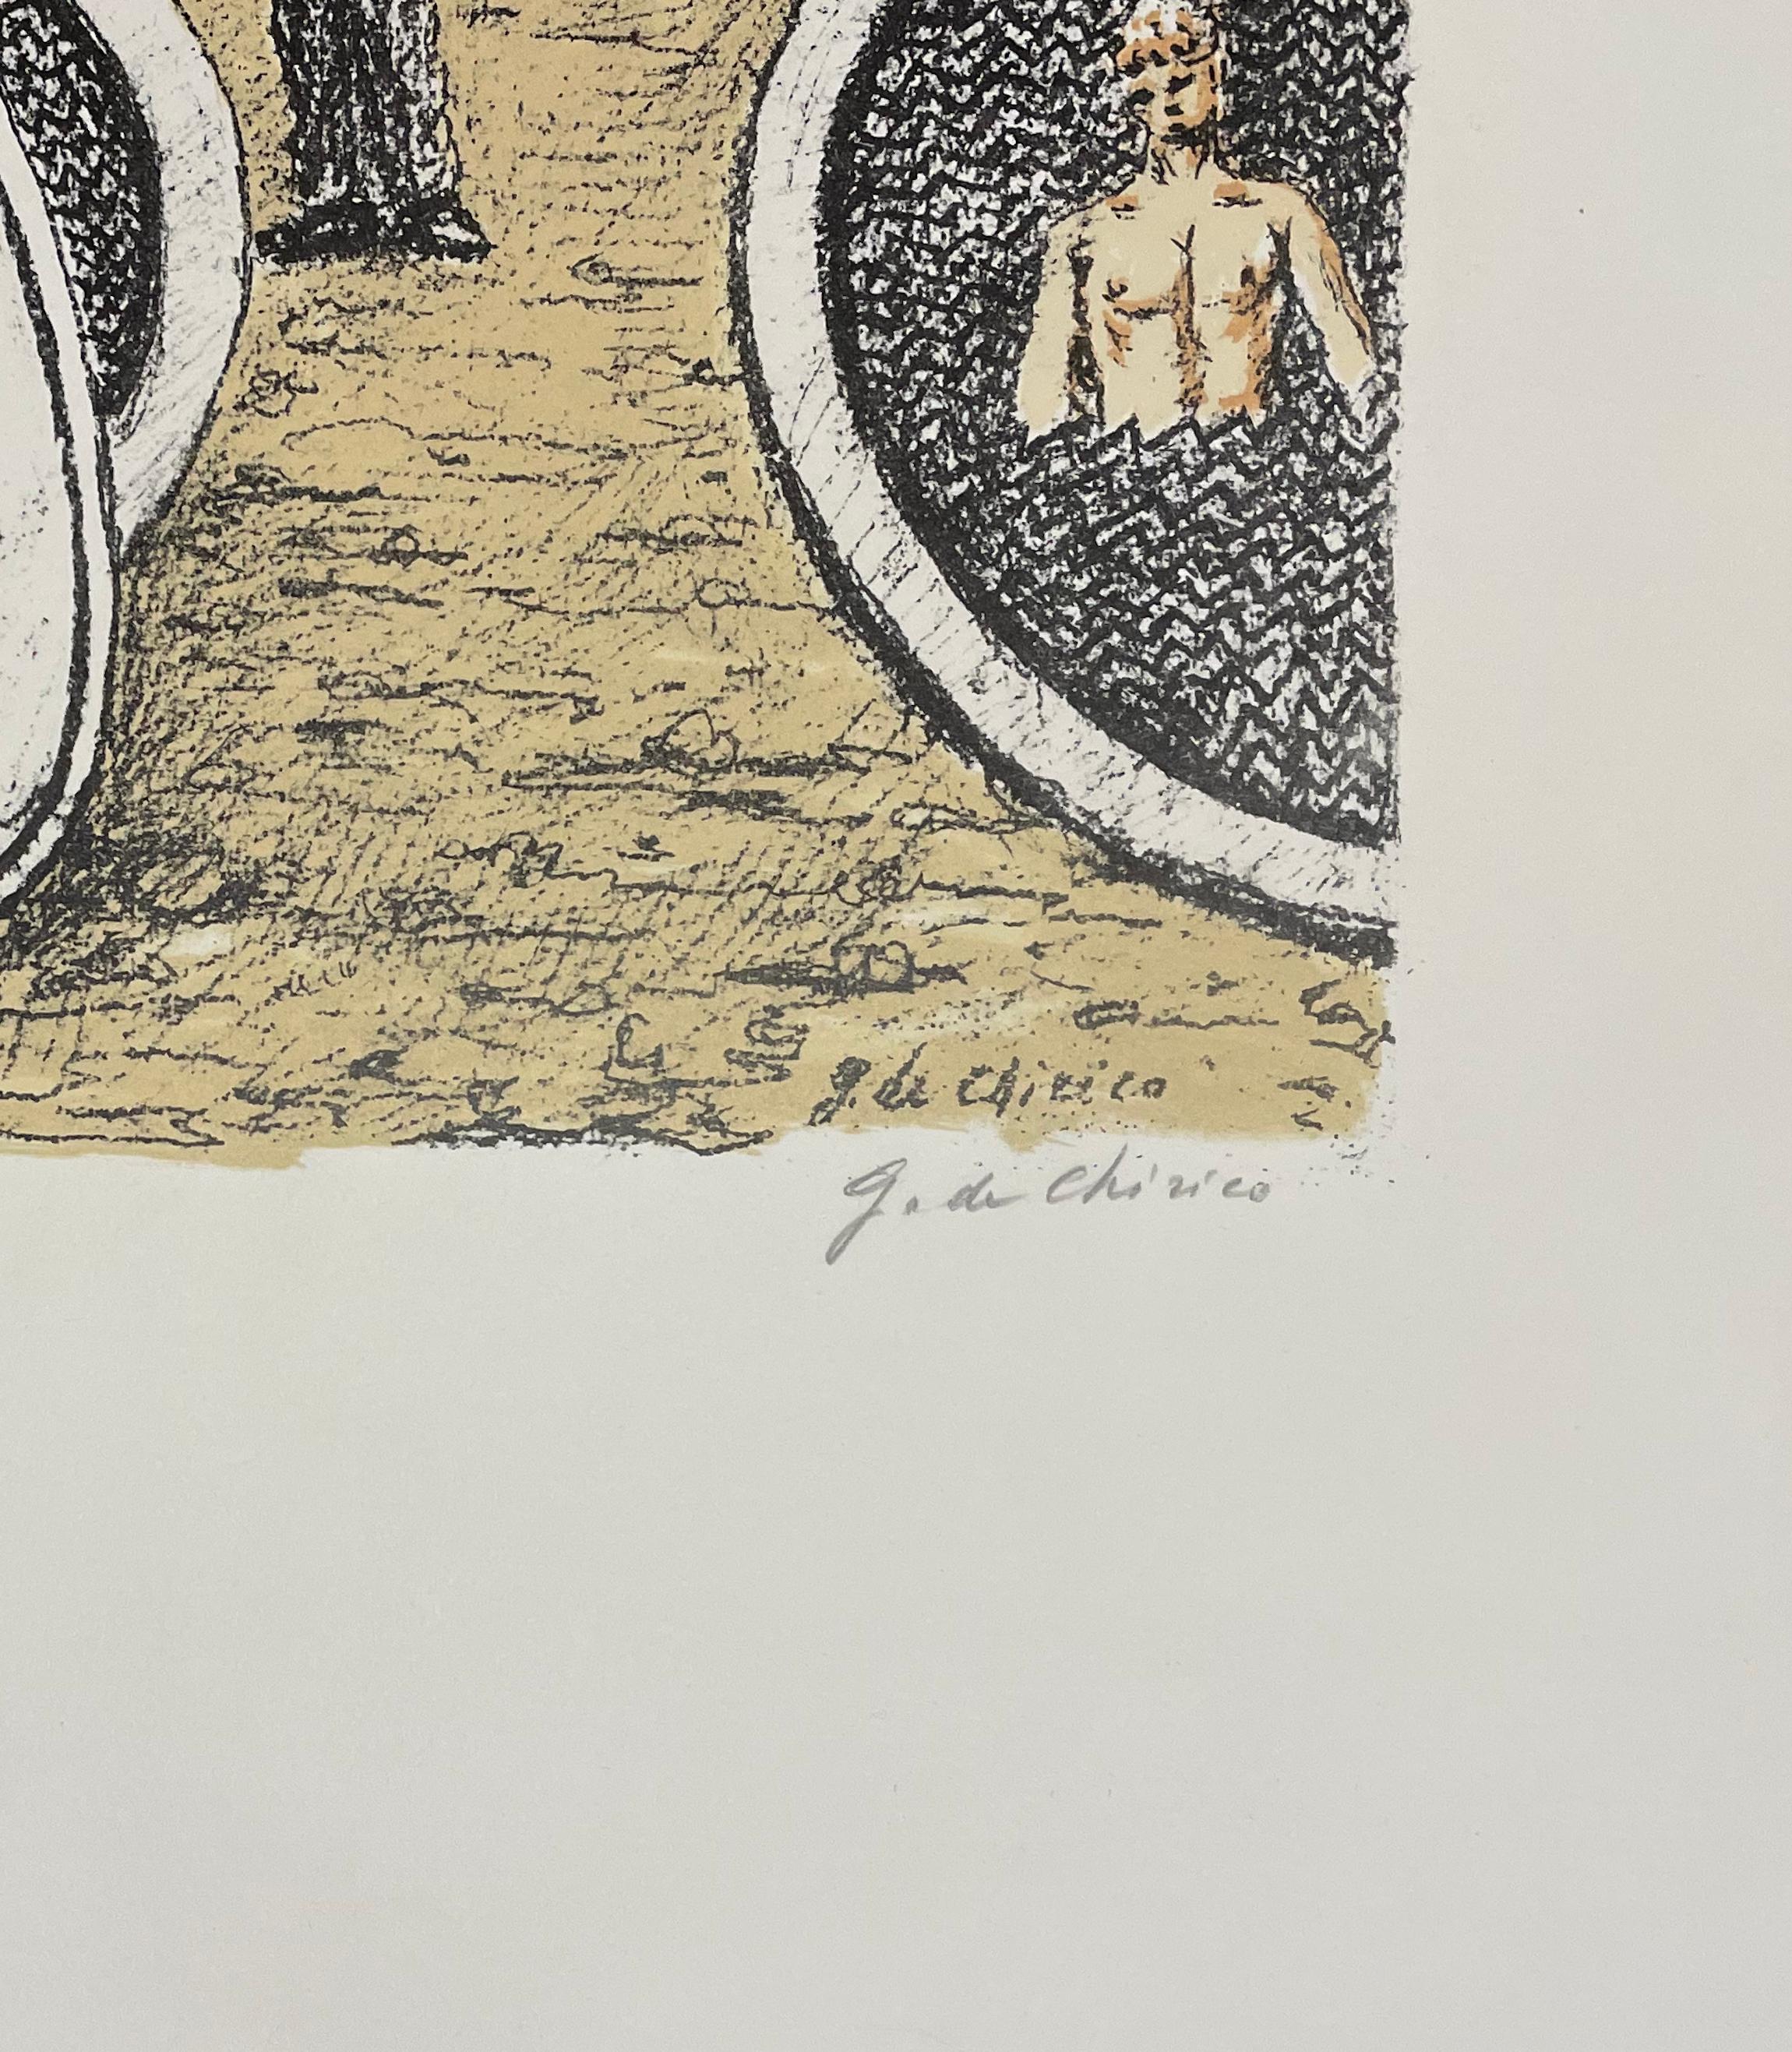 L'Ospite dei Bagnanti Misteriosi - Lithographie de G. De Chirico - 1969 - Surréalisme Print par Giorgio De Chirico